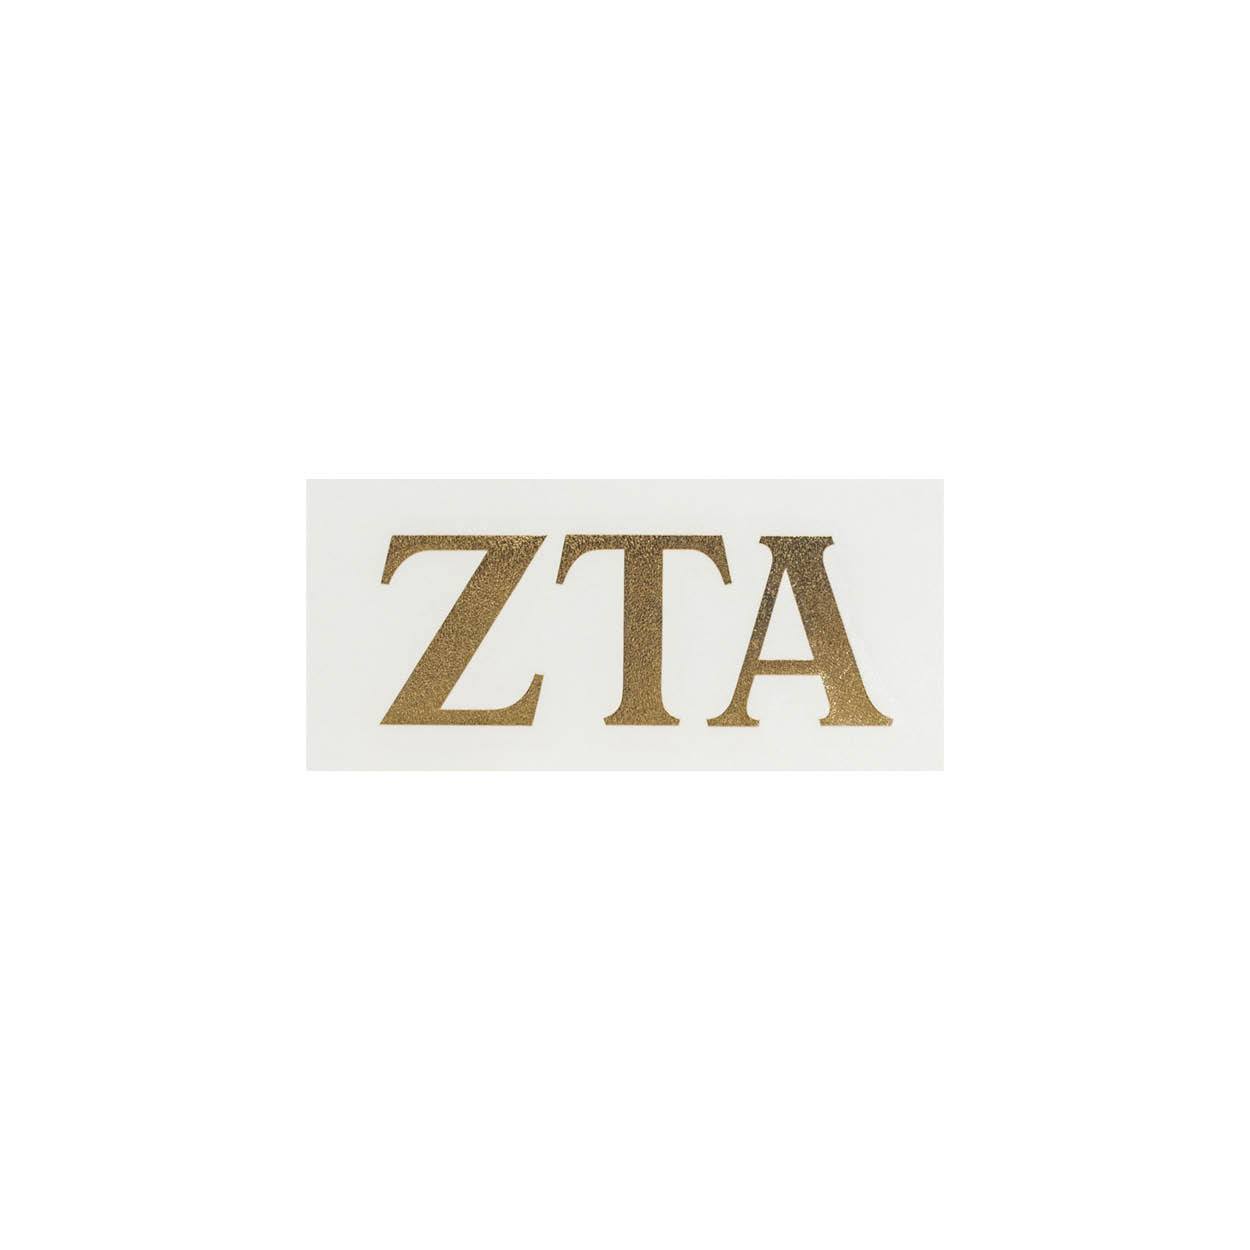 Gold Foil Decal Greek in Zeta Tau Alpha at Wrapsody